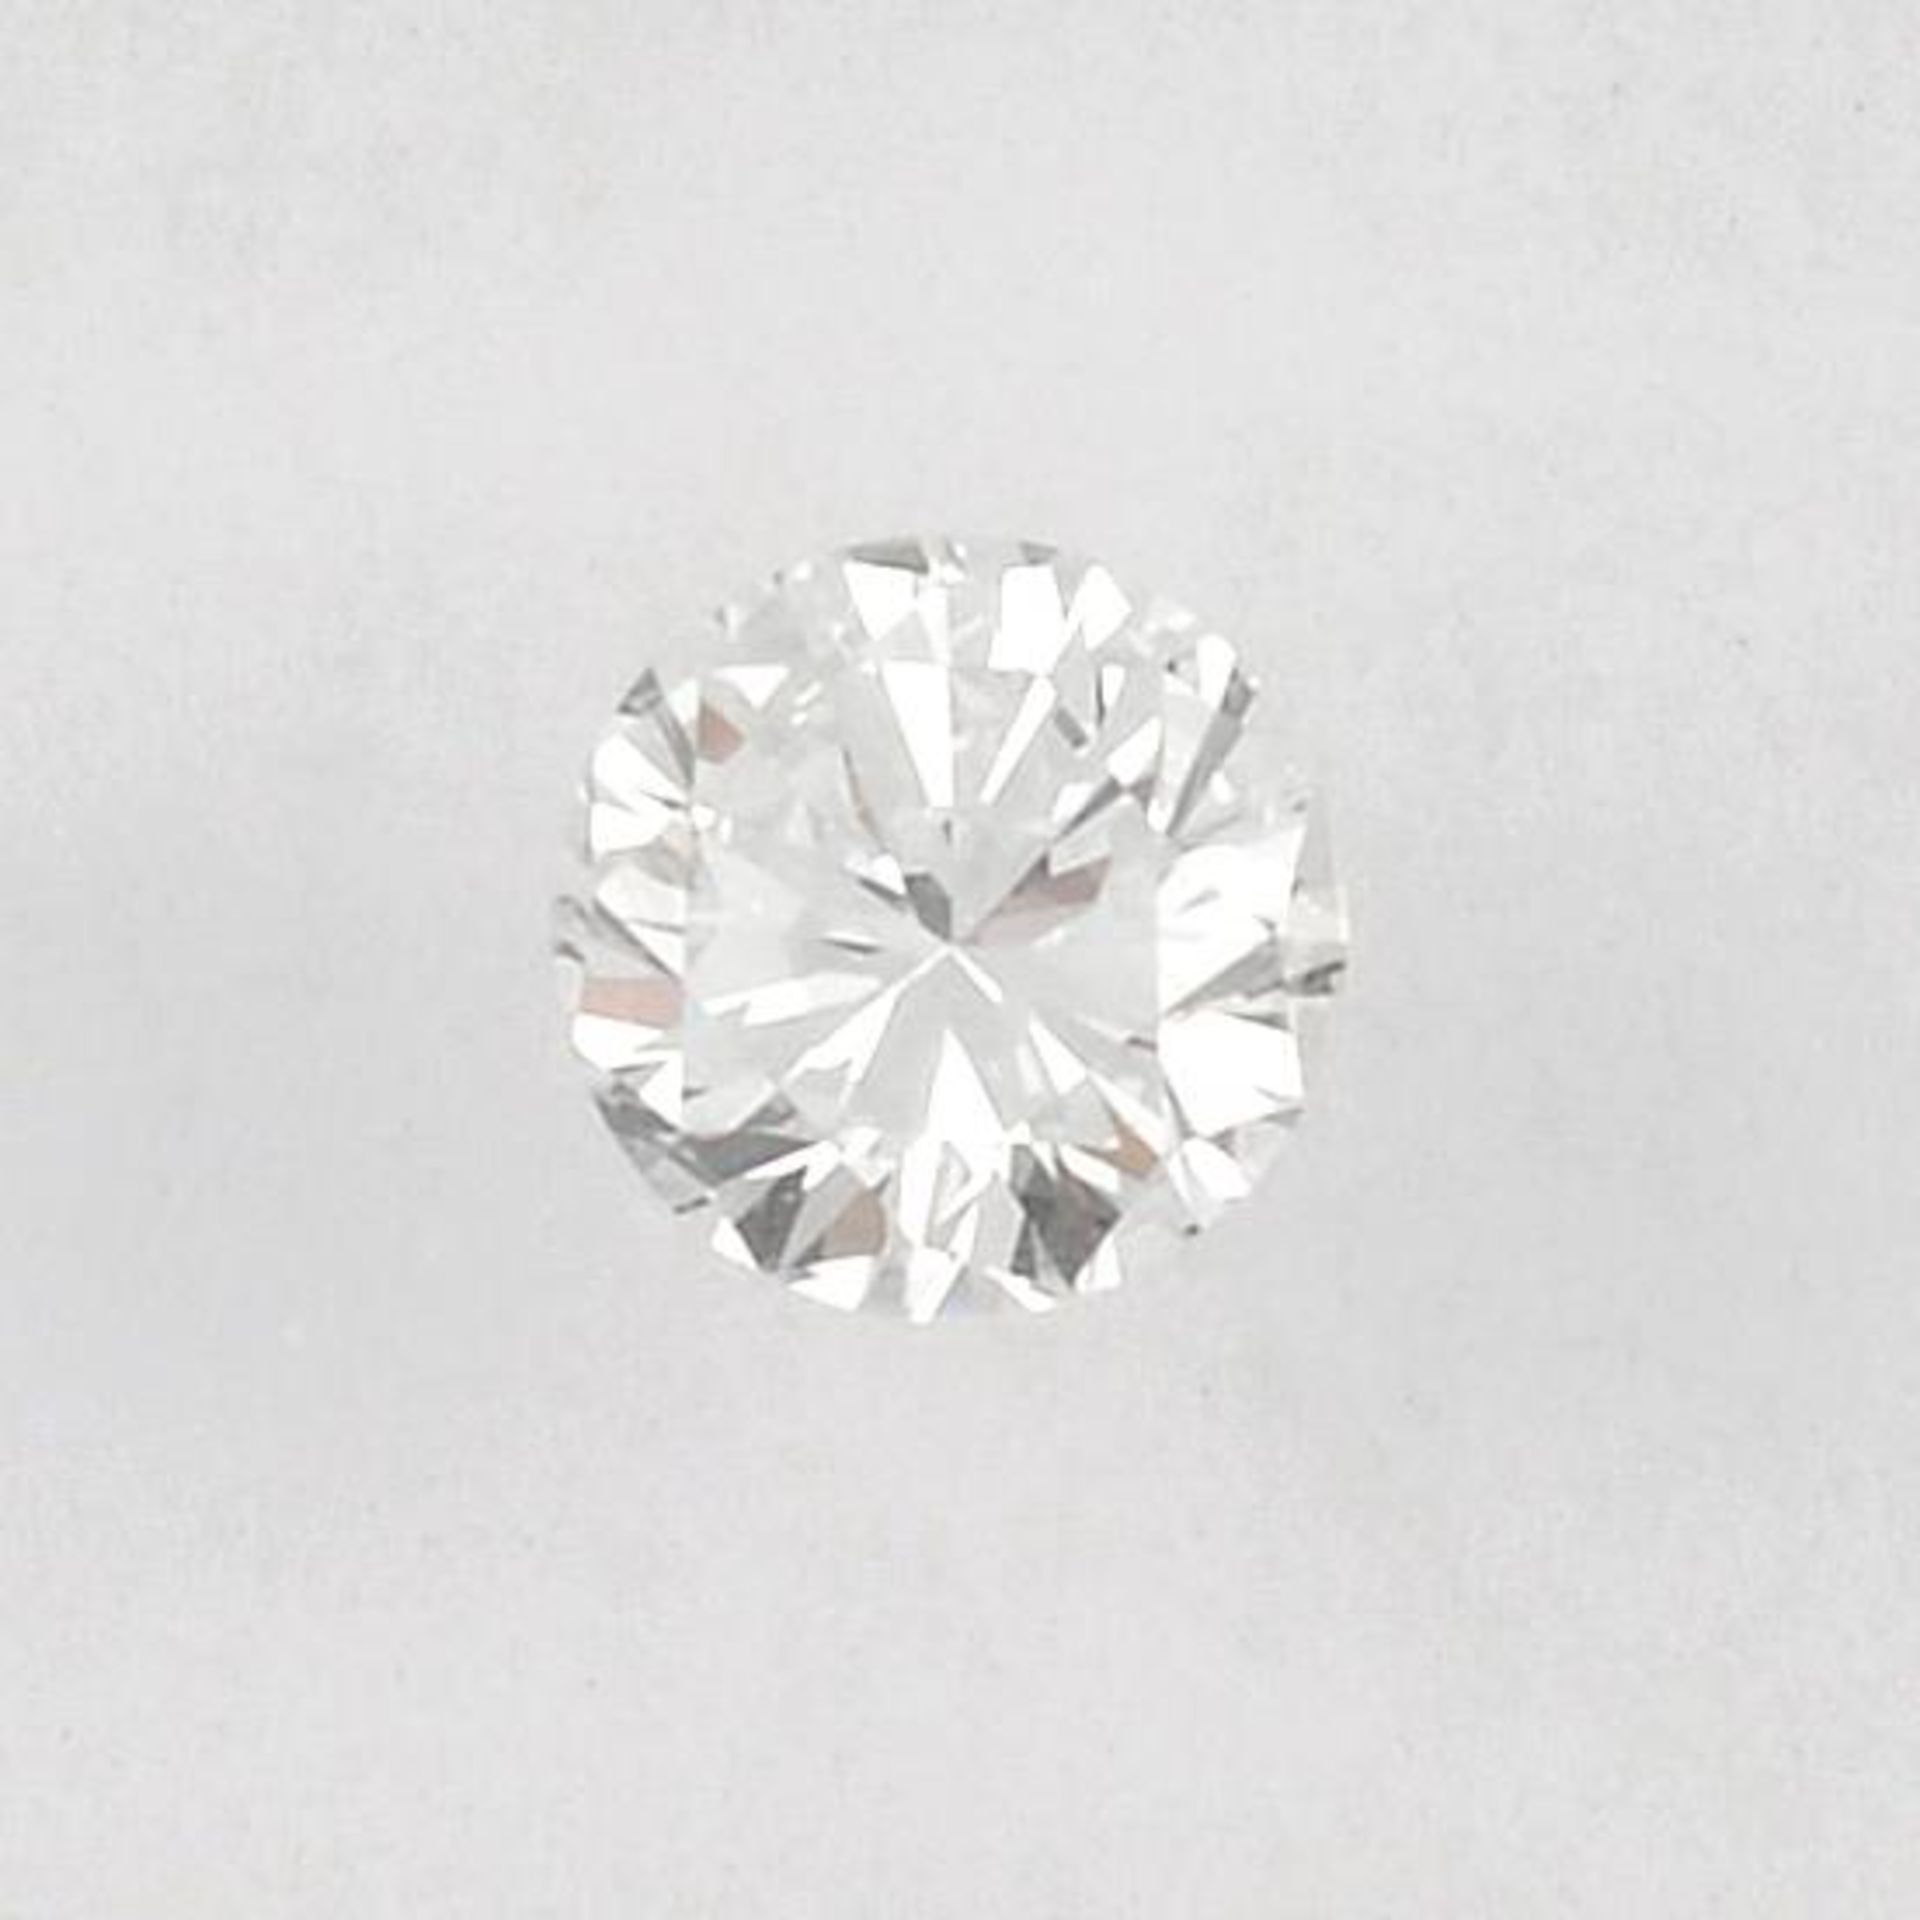 A brilliant cut diamond, weighing 0.39ct.